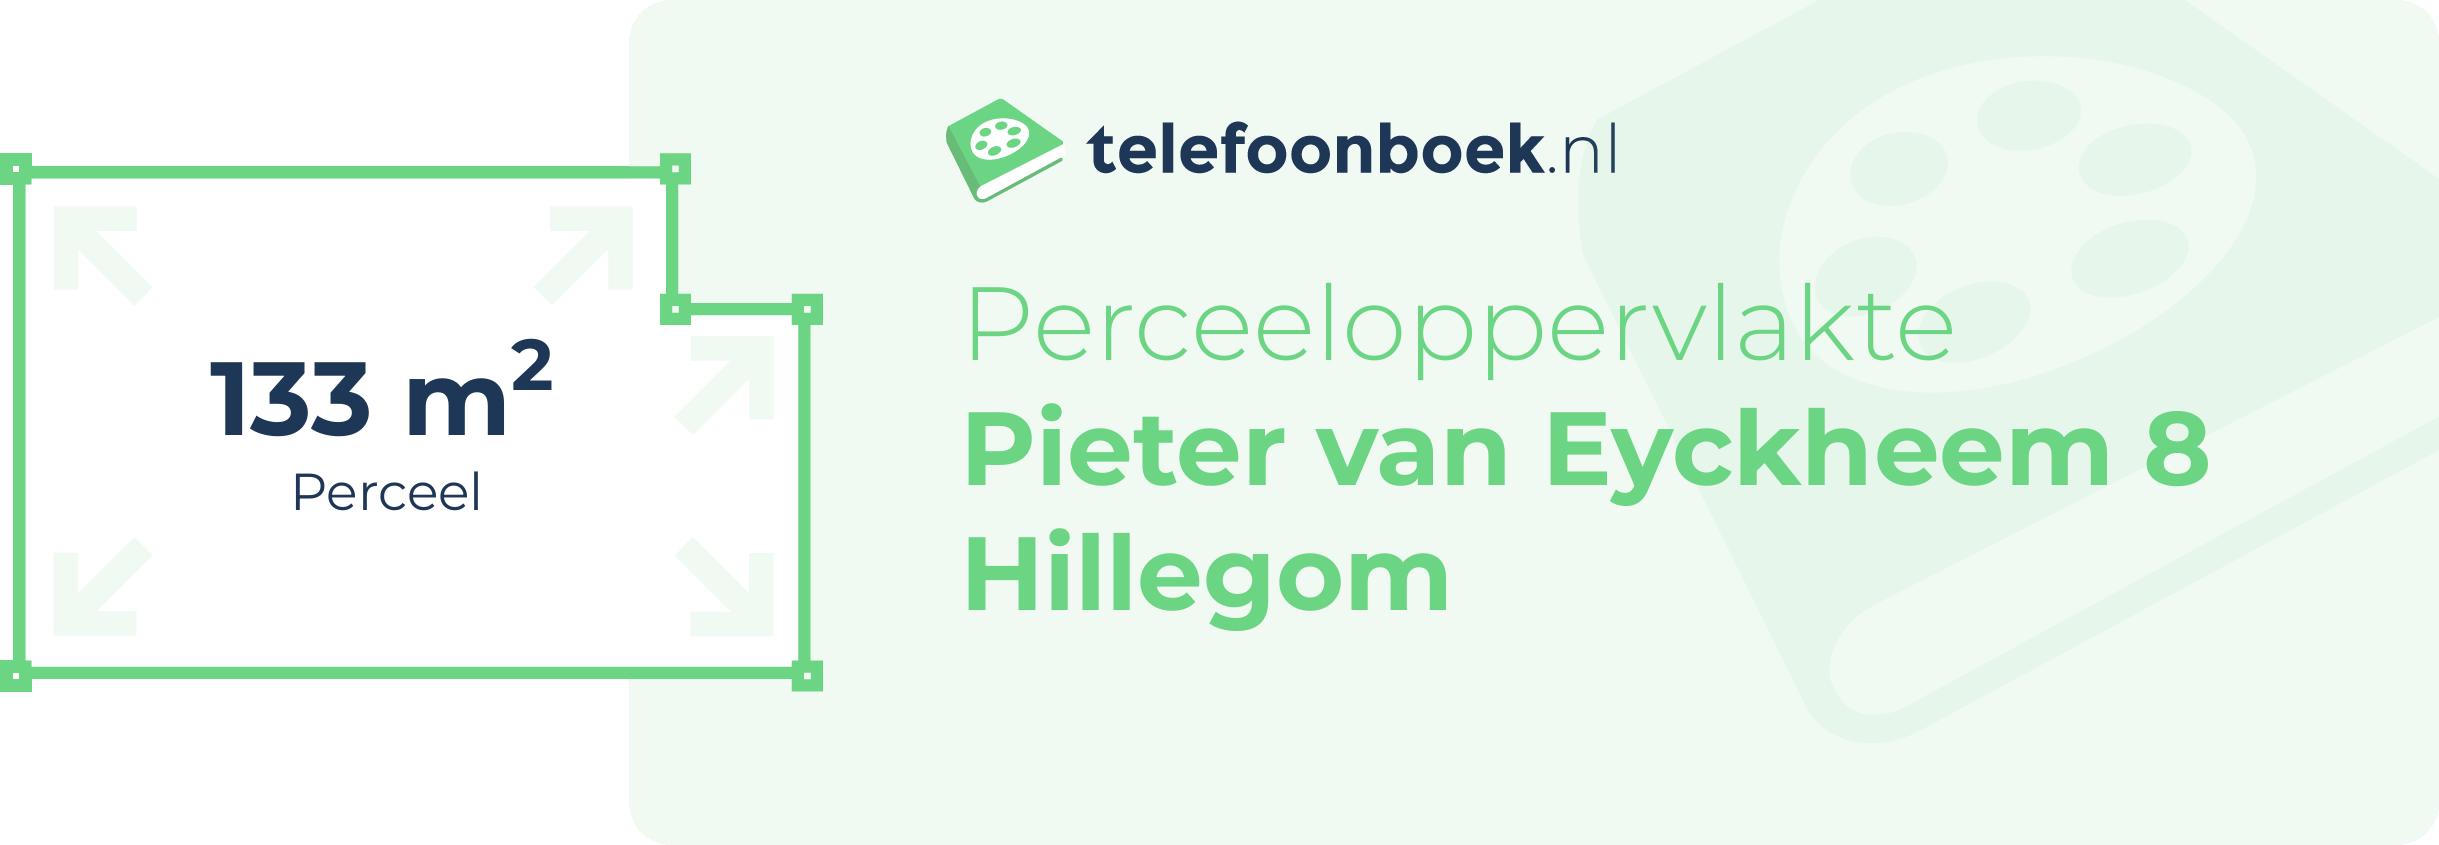 Perceeloppervlakte Pieter Van Eyckheem 8 Hillegom